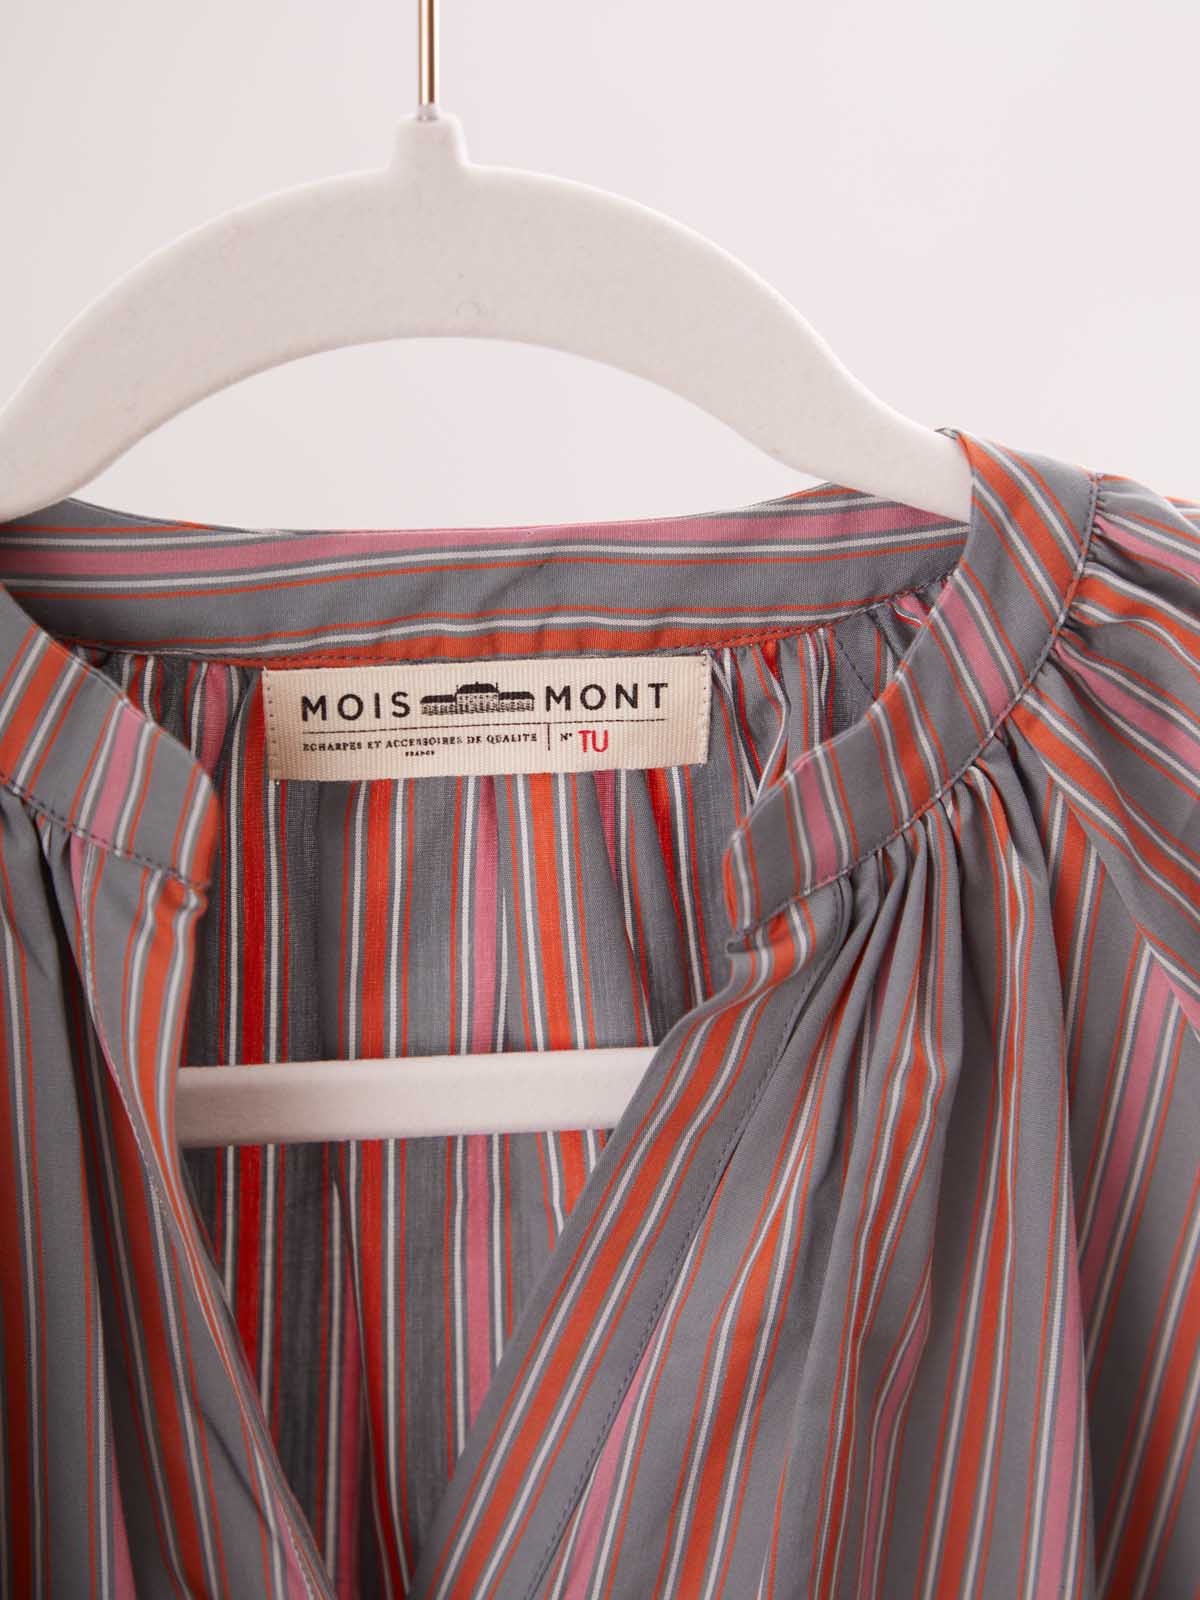 Moismont striped shirt detail